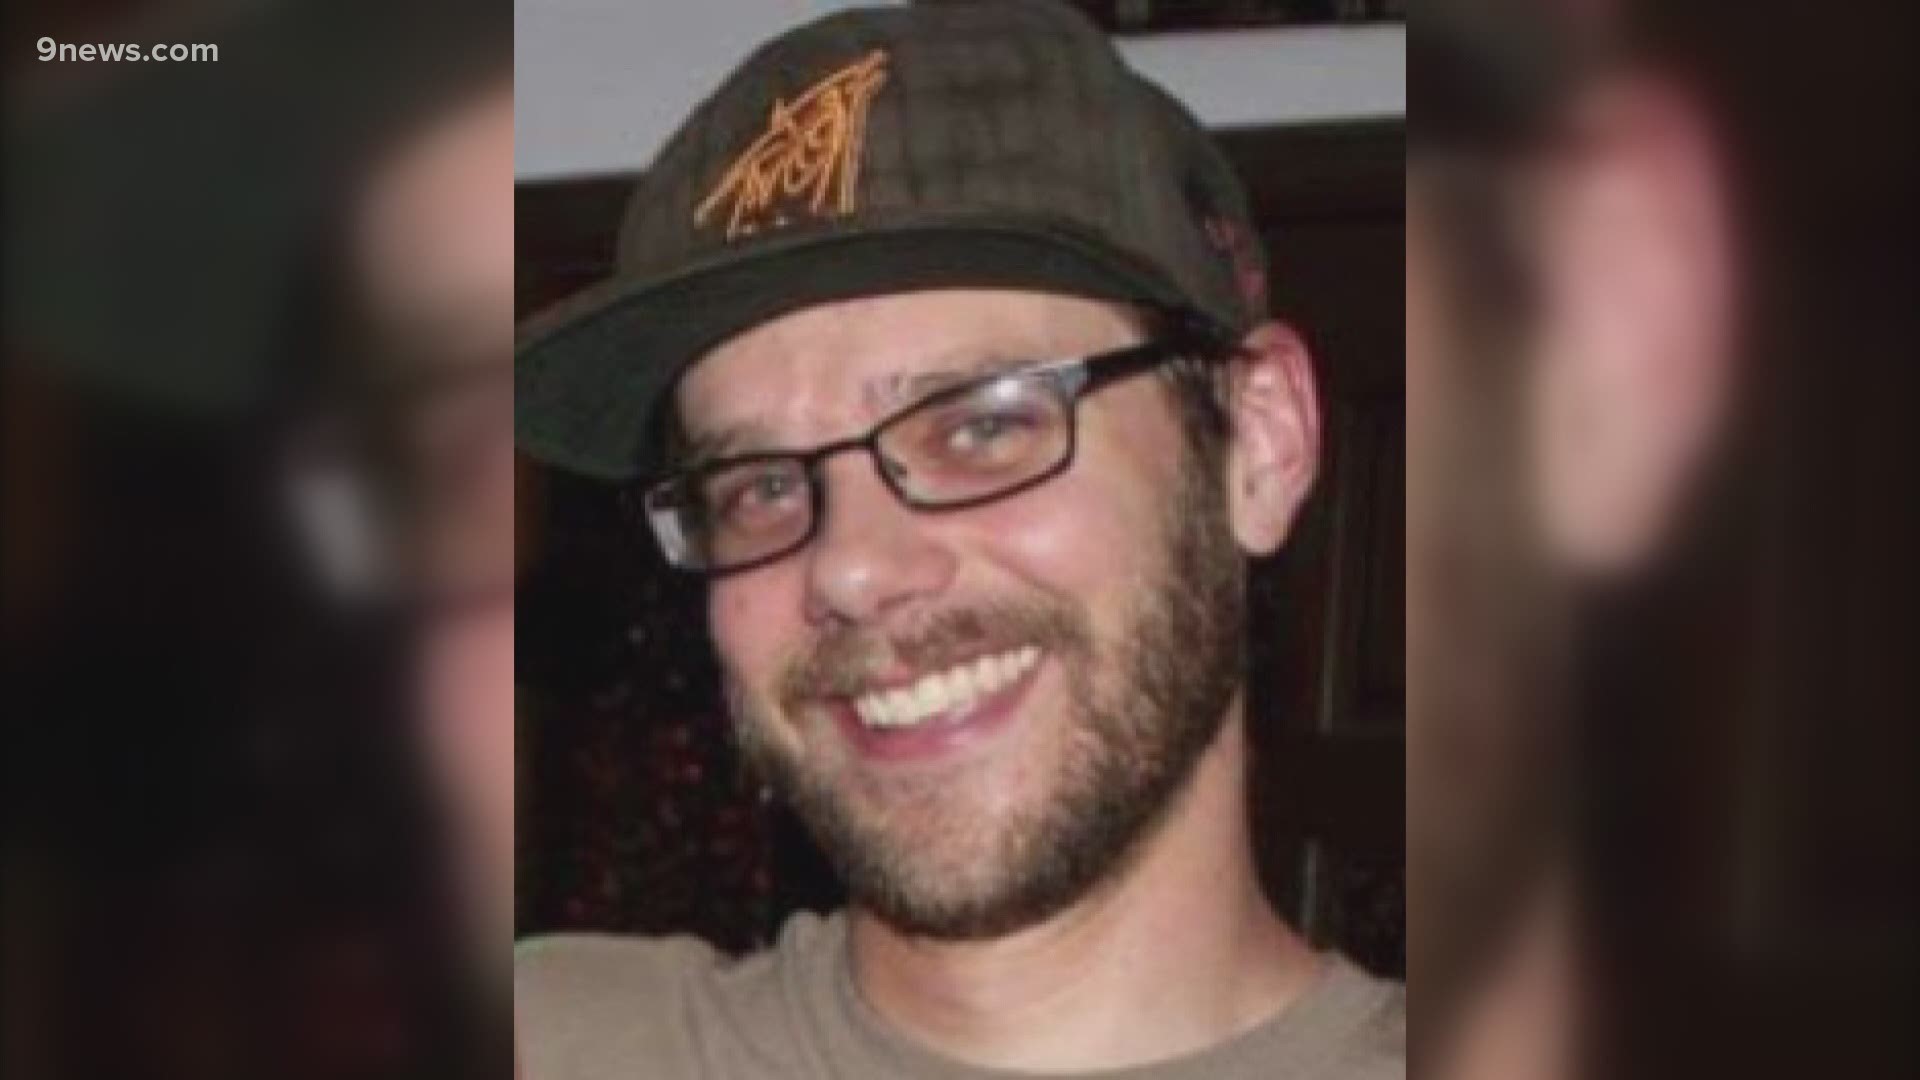 The "Good Samaritan" has been identified as 40-year-old Johnny Hurley.